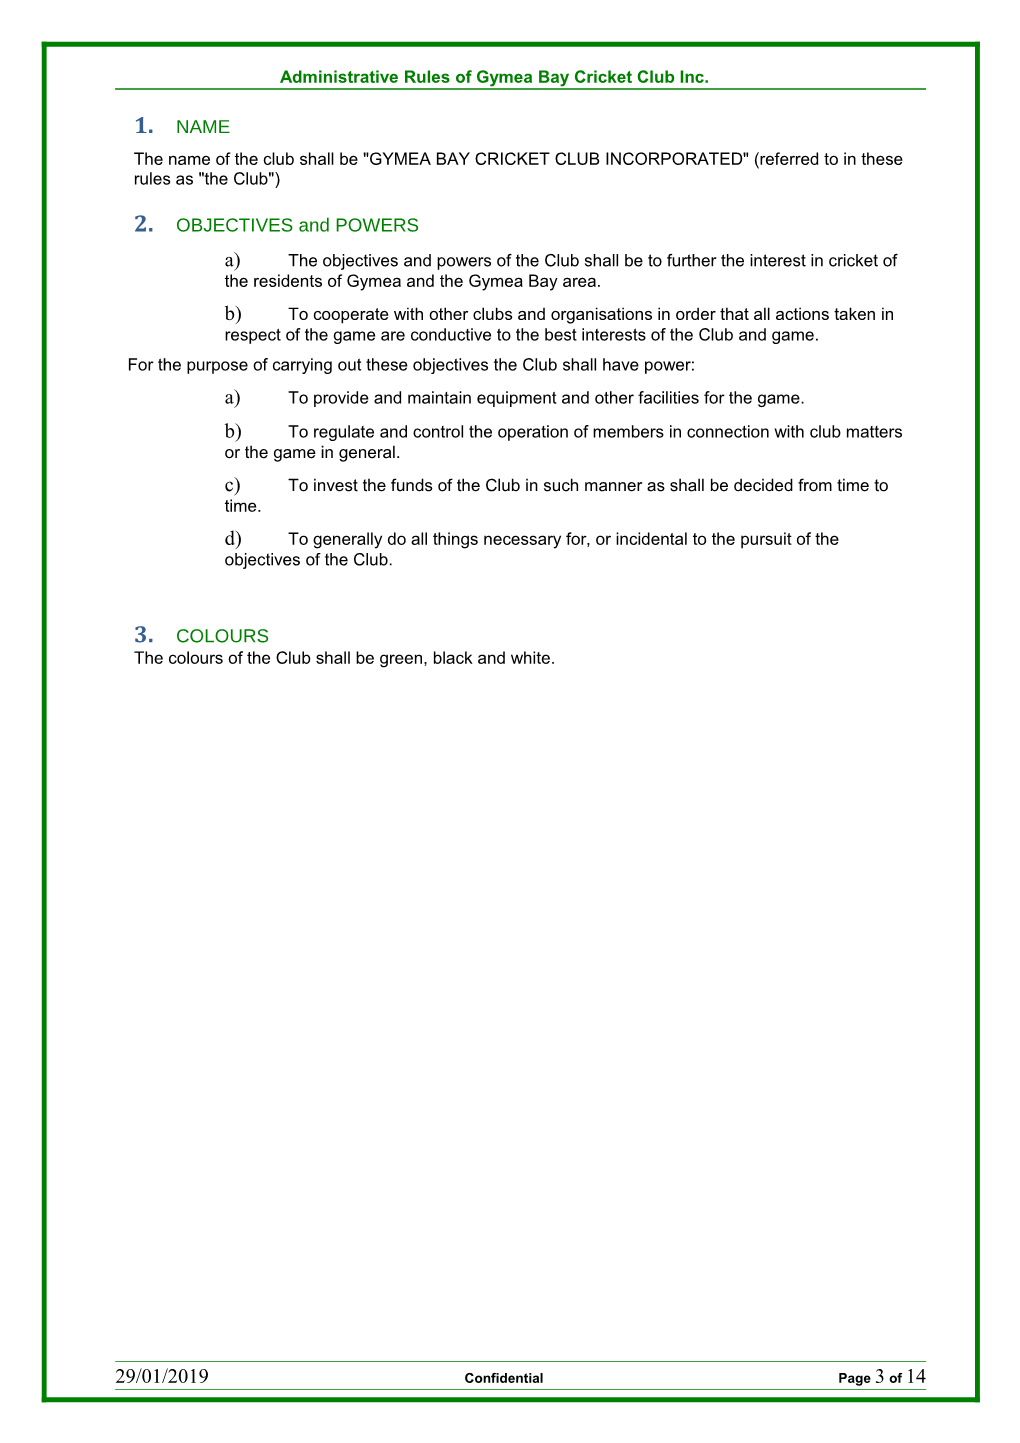 Administrative Rules of Gymea Bay Cricket Club Inc